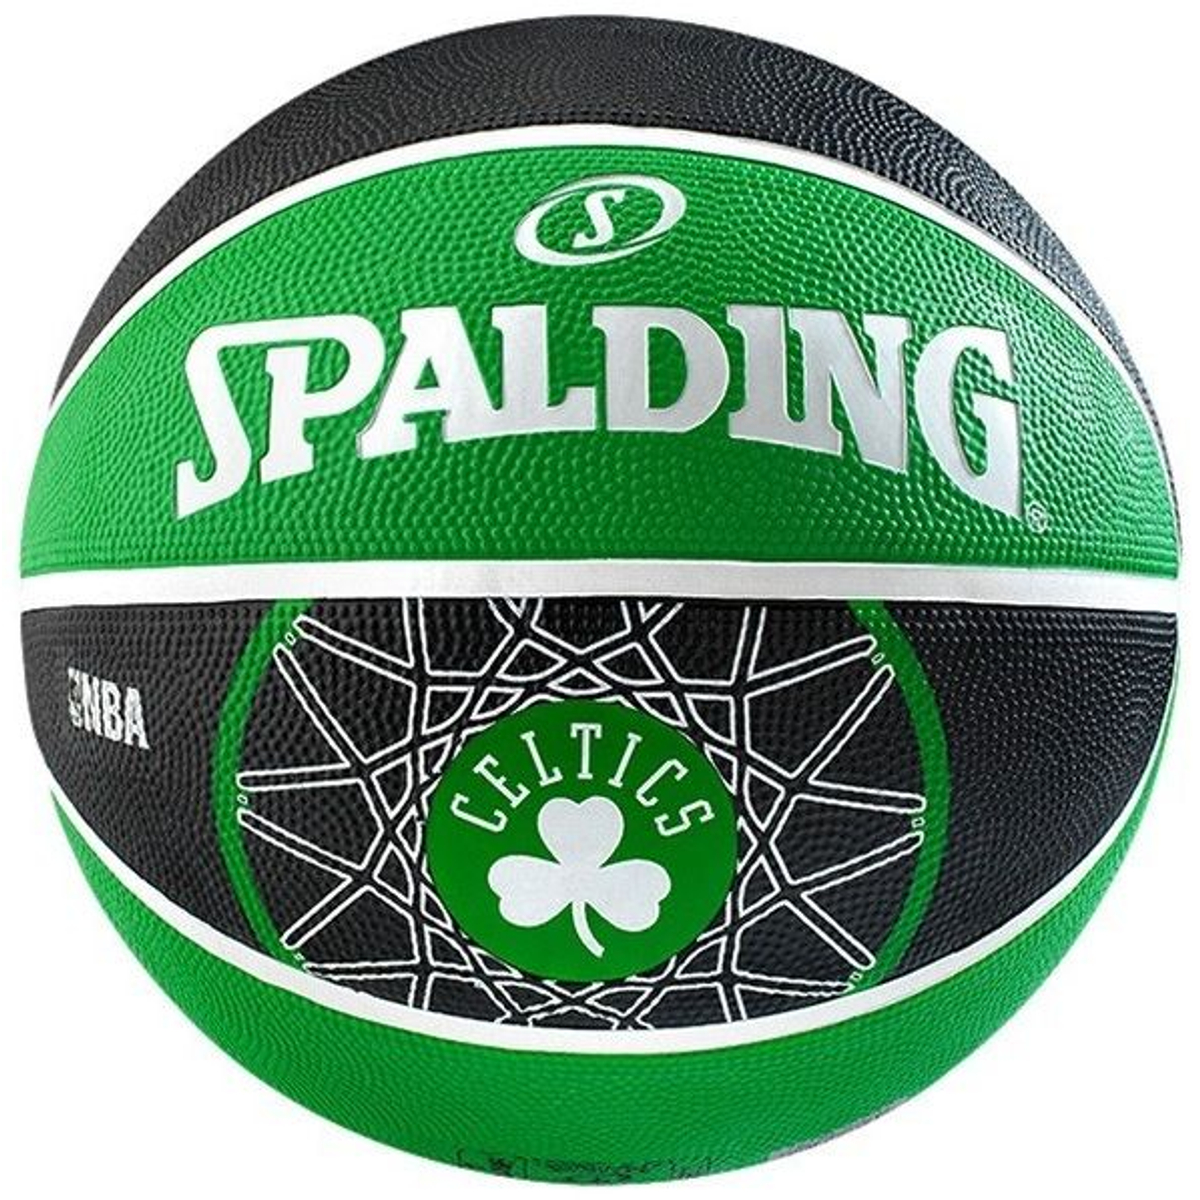 Spalding NBA Boston Celtics Basketbal